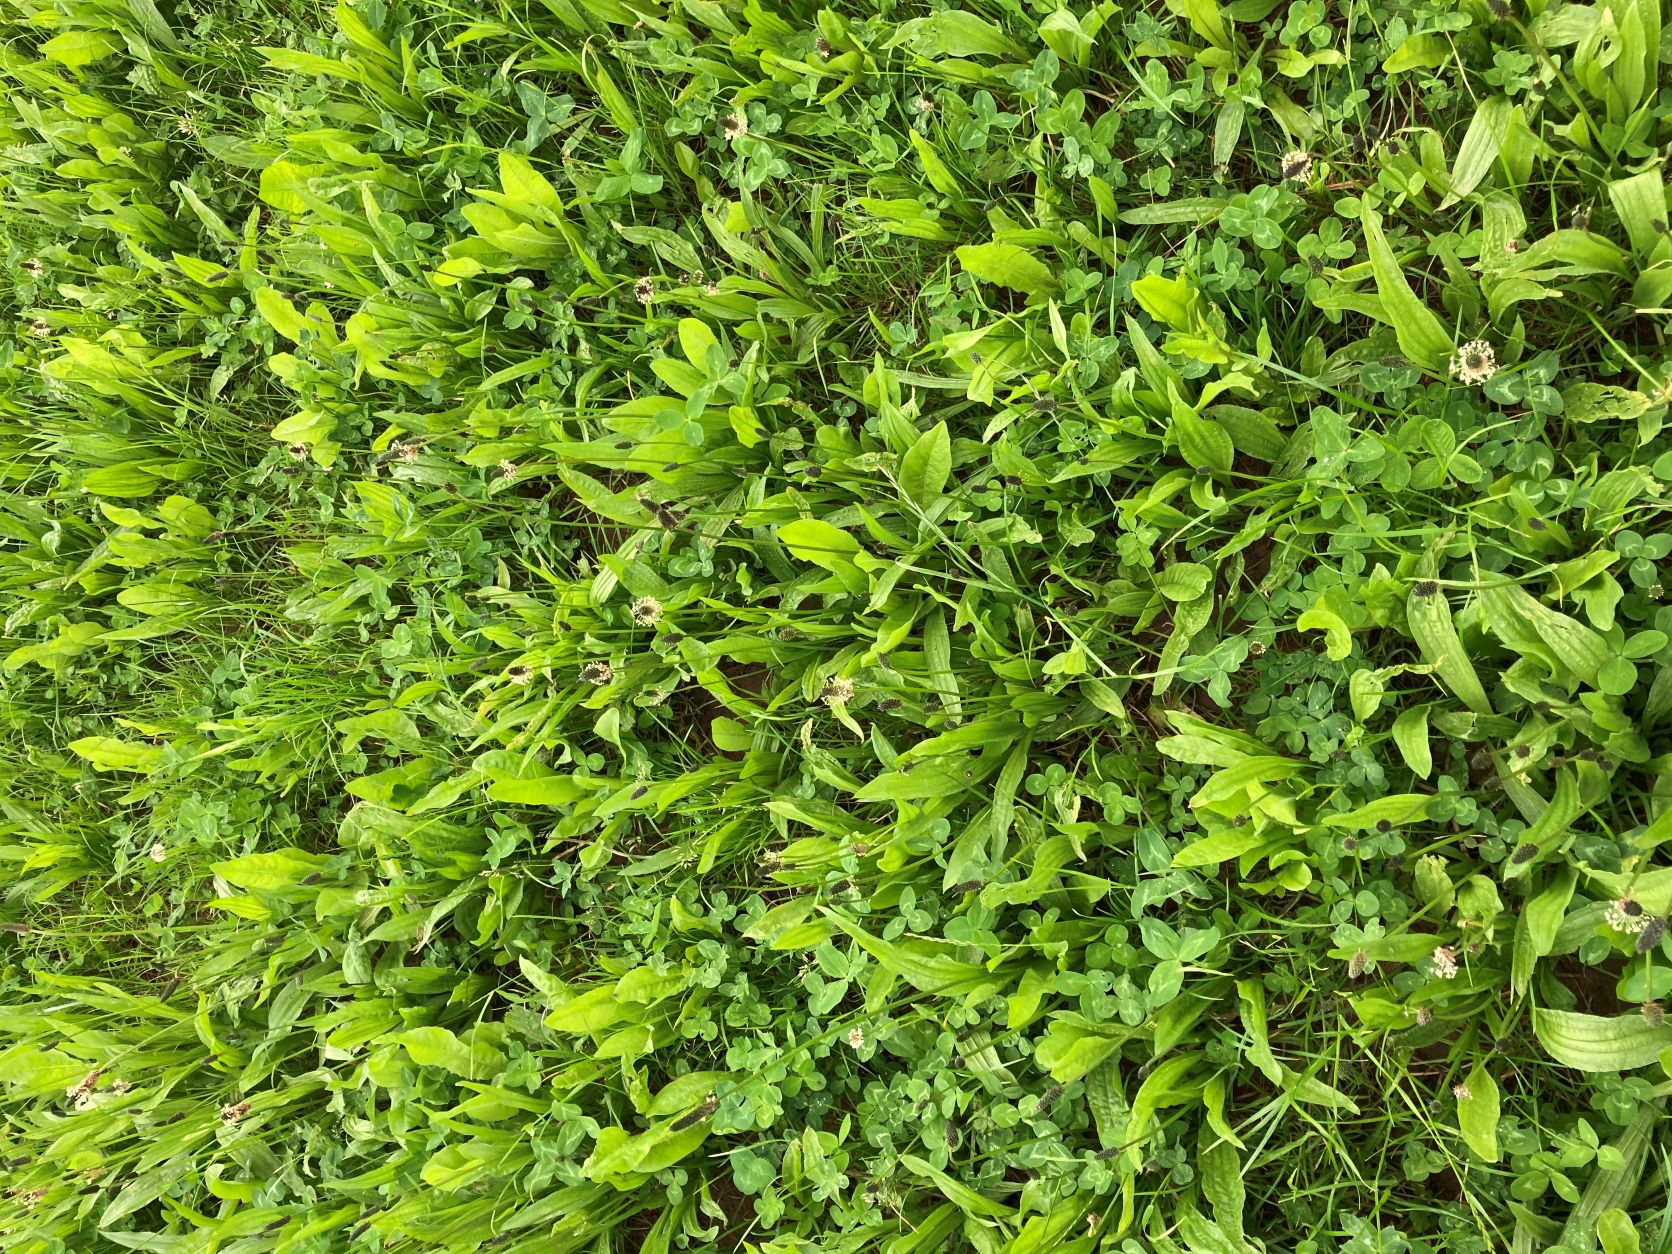 Herbal ley grass field